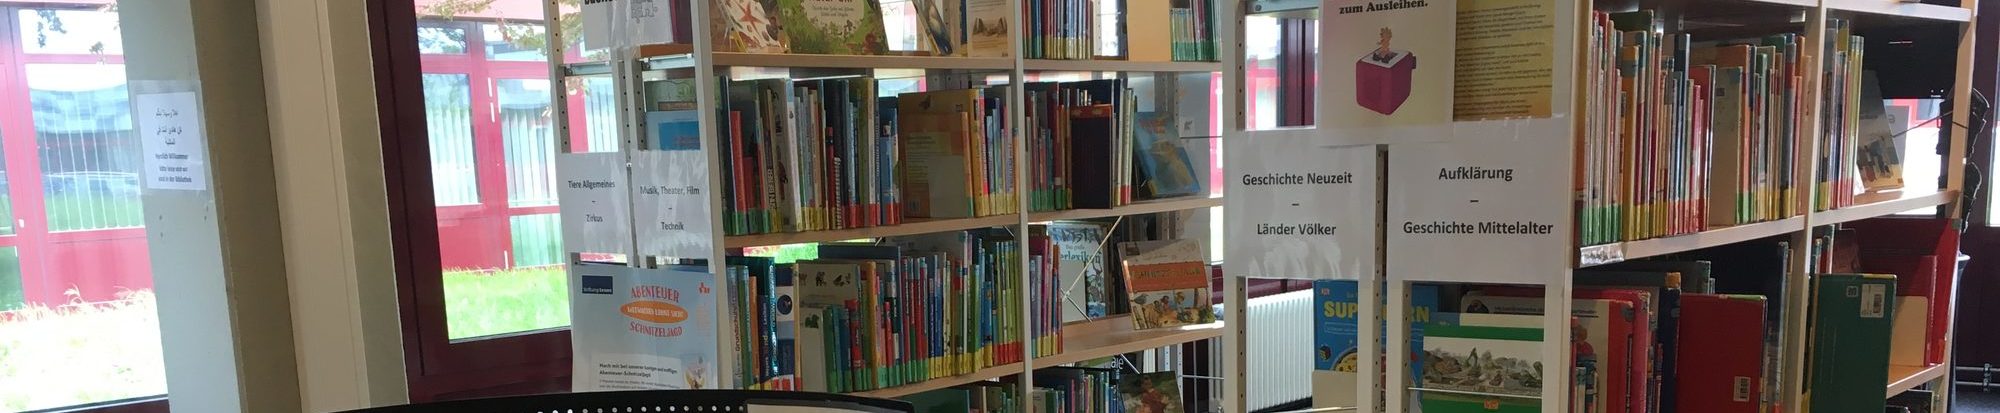 Kinderbibliothek in Fredenberg